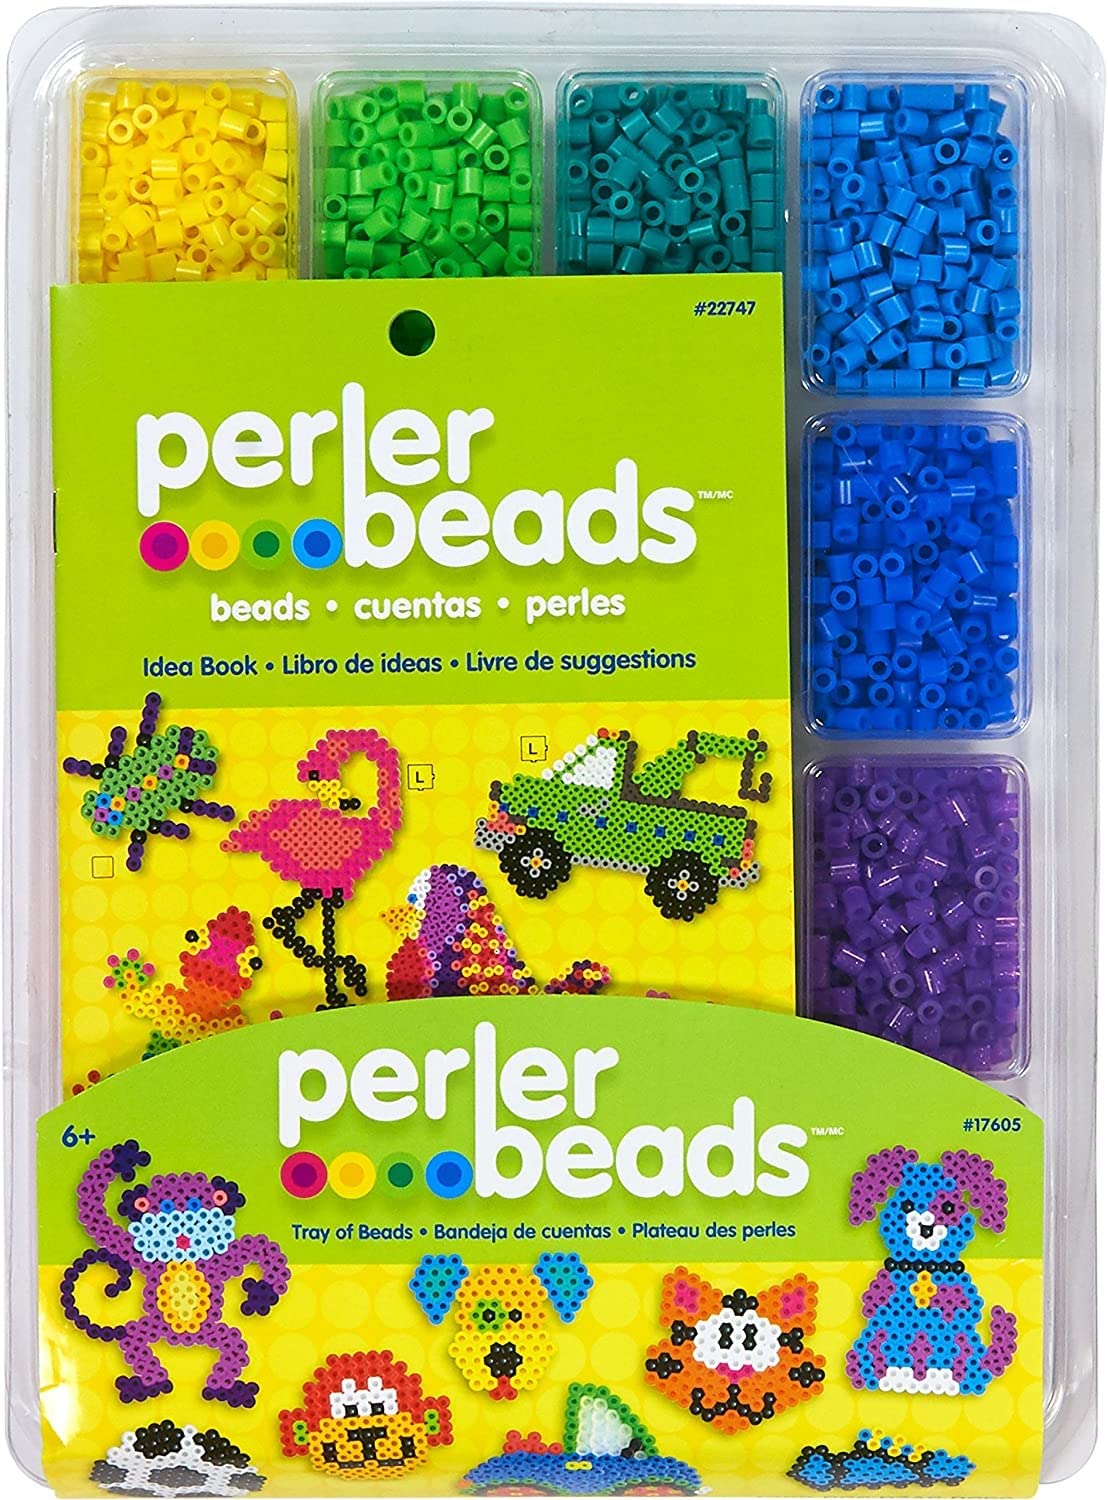 Perler bead organization  Diy perler bead crafts, Bead organization, Perler  beads designs